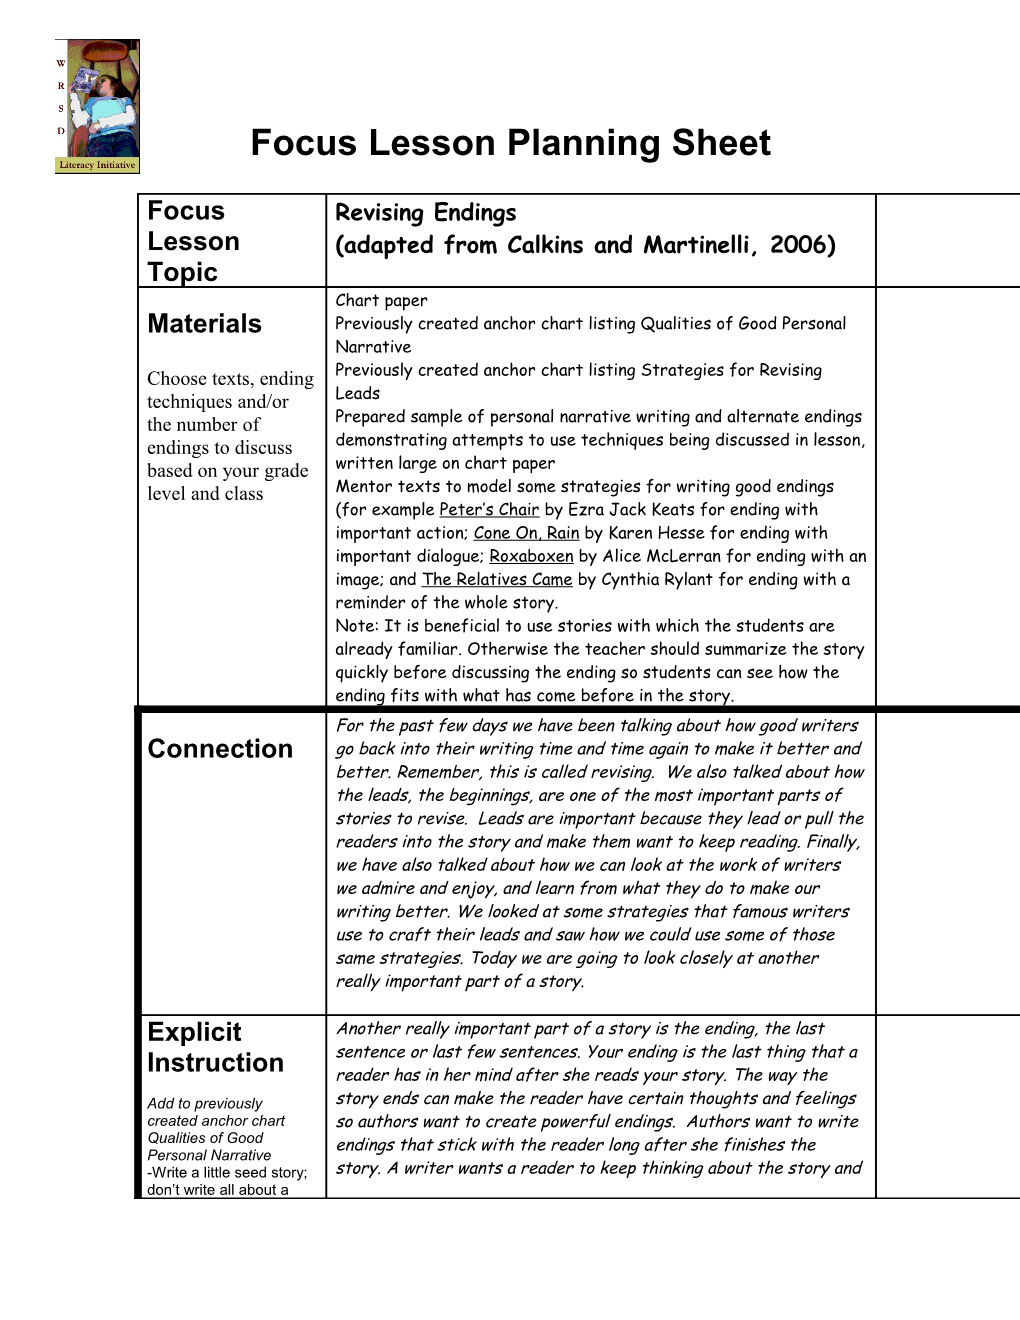 Focus Lesson Planning Sheet s6